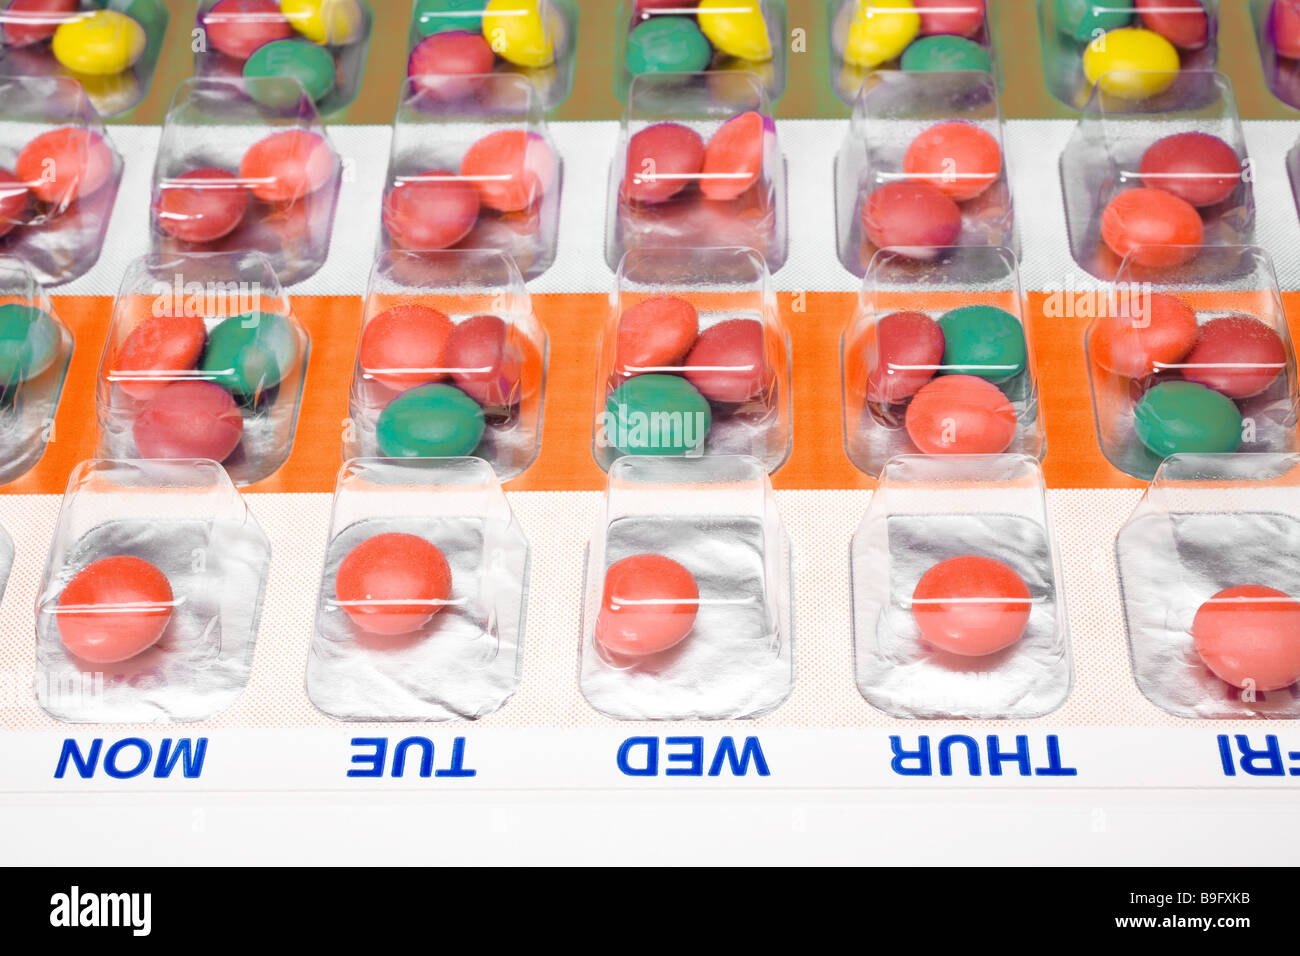 Medicina Stilllife píldoras de dosis de droga droga cuesta exigir contribución contribuciones dosificadores detalle dispensador tomando dosis-veces Foto de stock